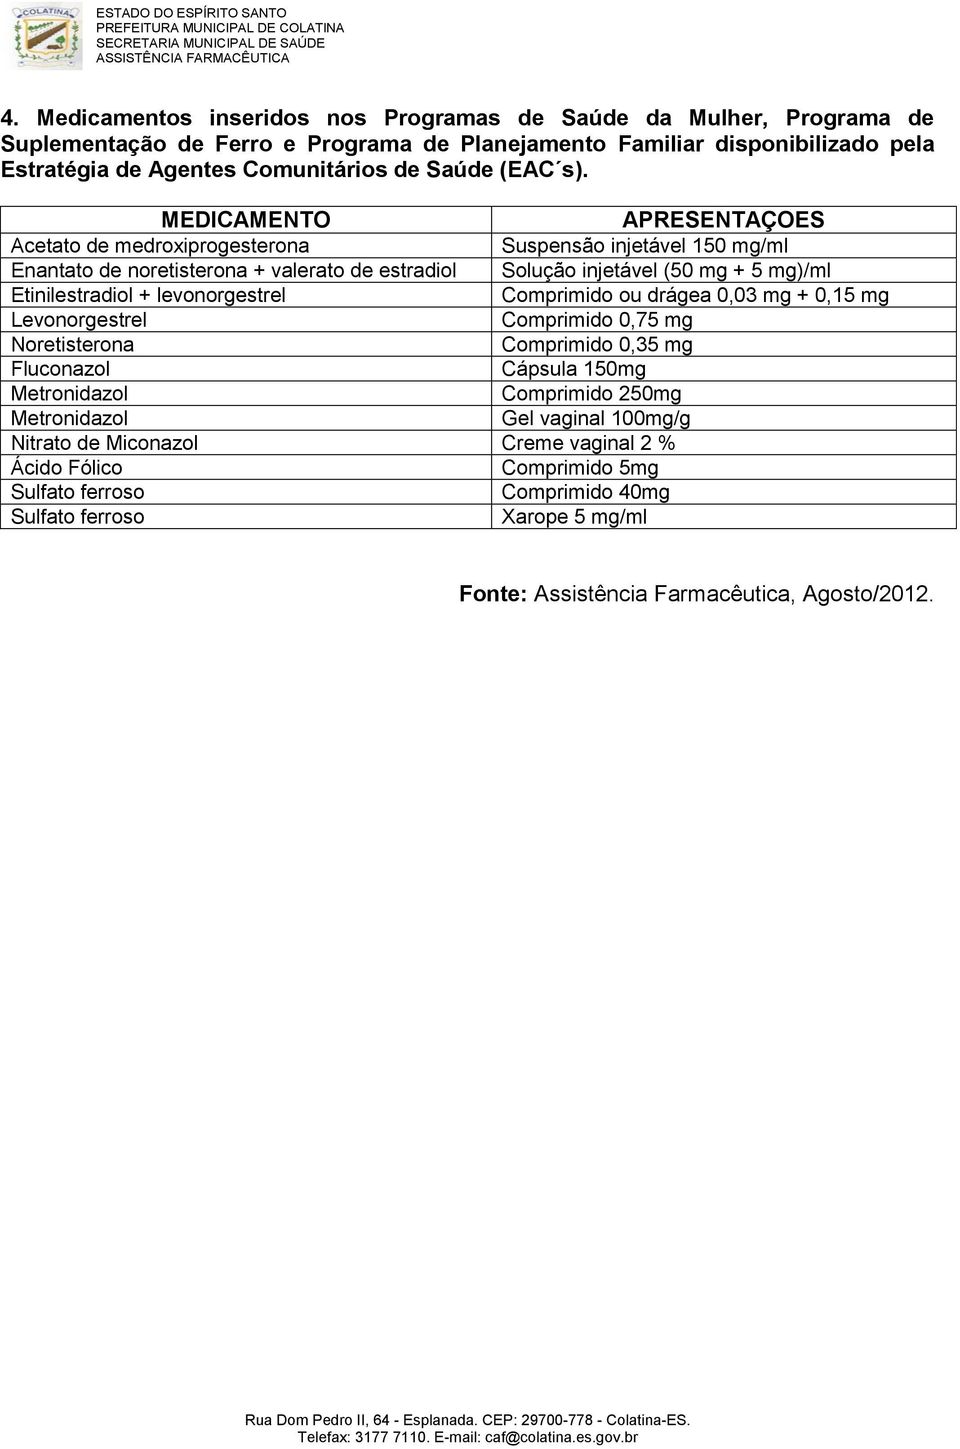 MEDICAMENTO APRESENTAÇOES Acetato de medroxiprogesterona Suspensão injetável 150 mg/ml Enantato de noretisterona + valerato de estradiol Solução injetável (50 mg + 5 mg)/ml